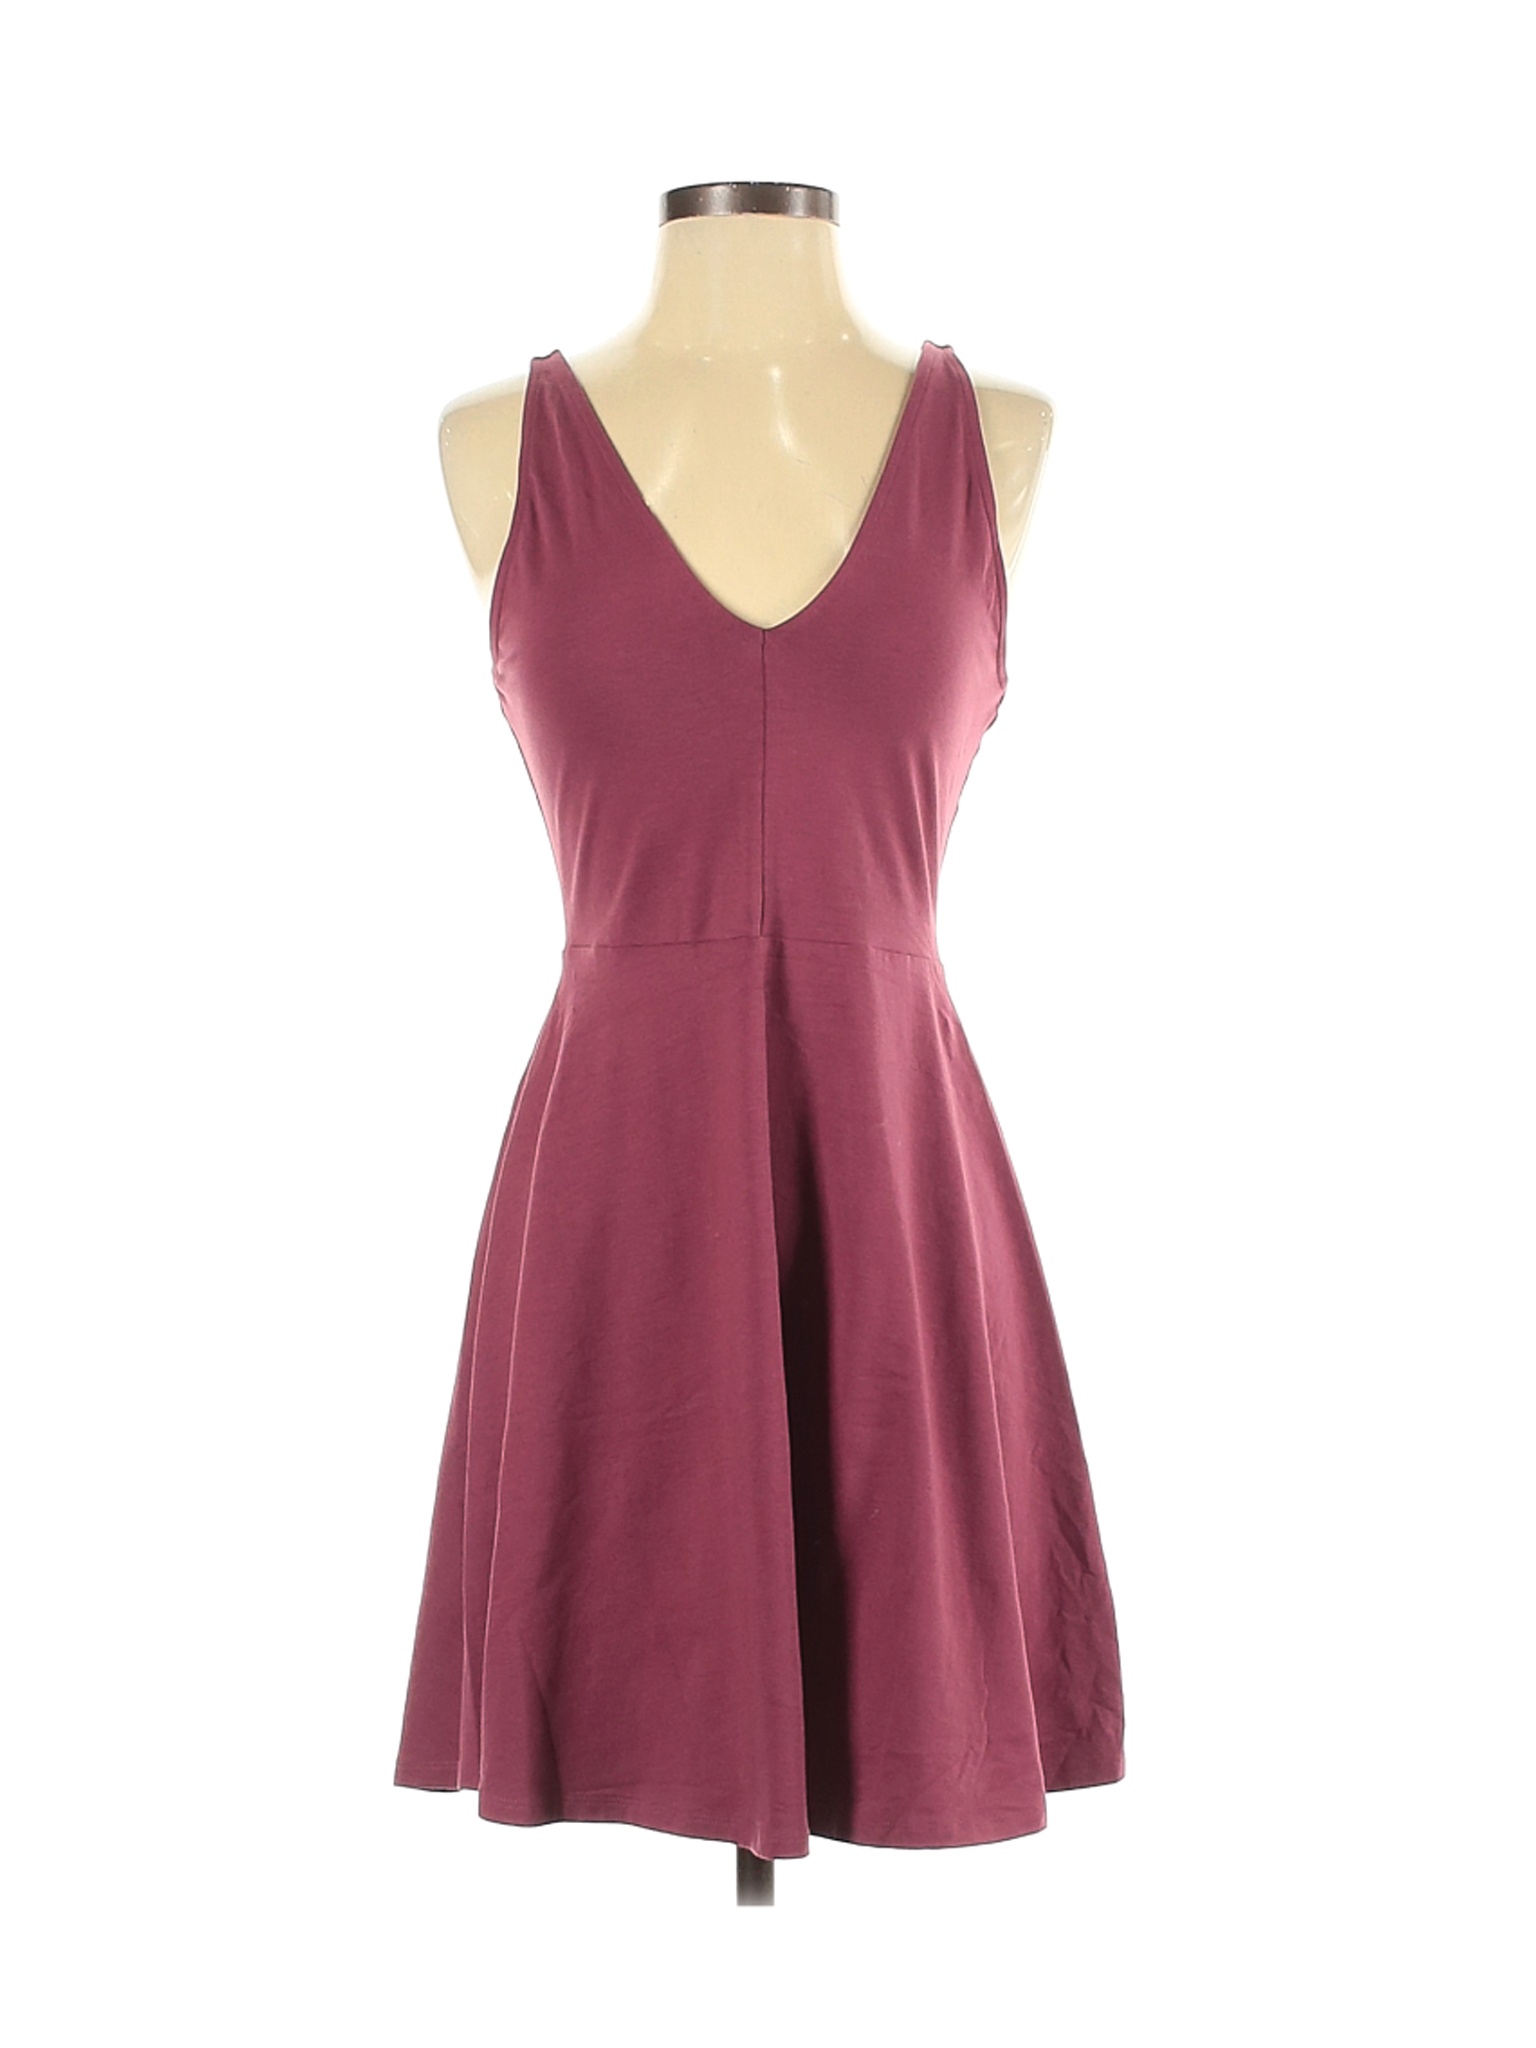 Express Outlet Women Pink Casual Dress S | eBay